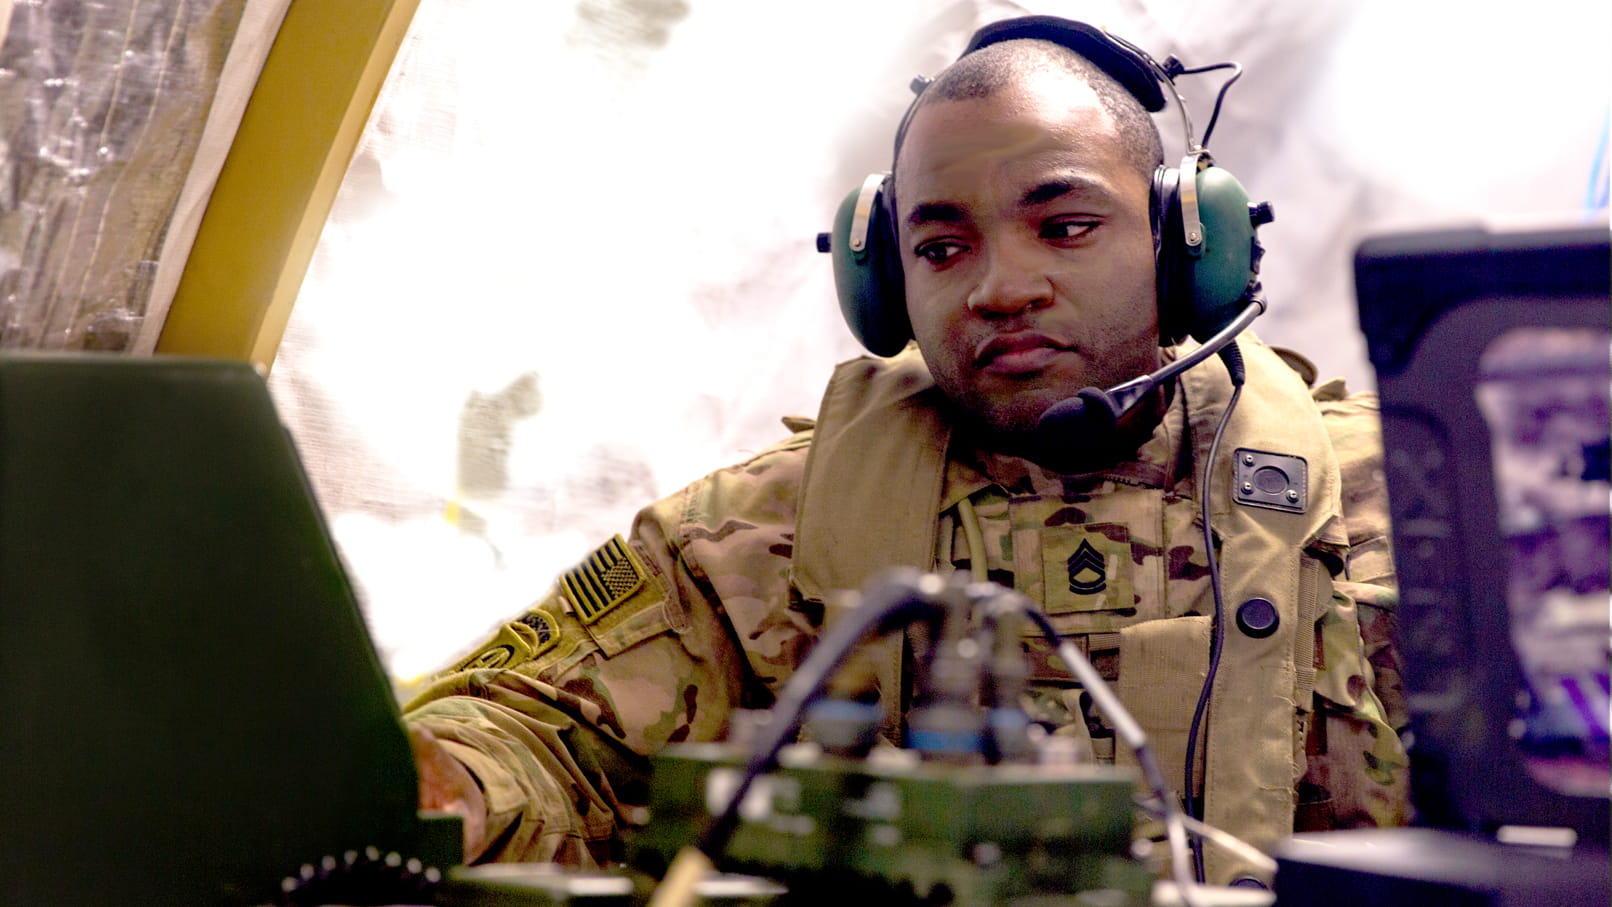 Military man with headphones